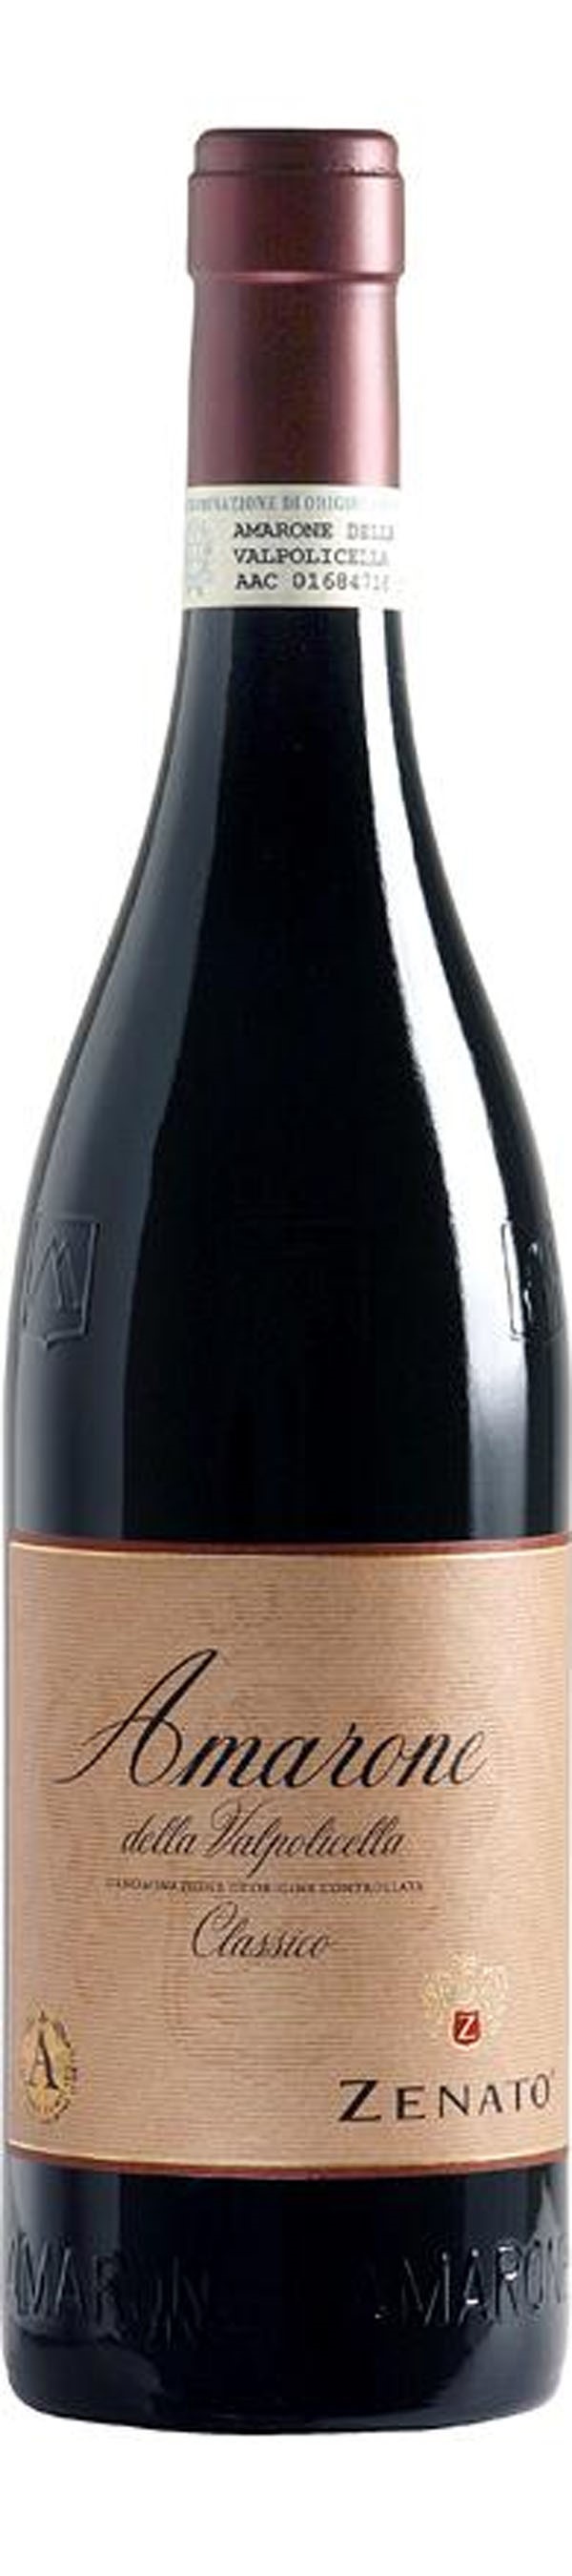 Zenato Amarone della Valpolicella 2011 named Best of Show Red awarded at South Walton Beaches Wine & Food Festival's International Wine Competition